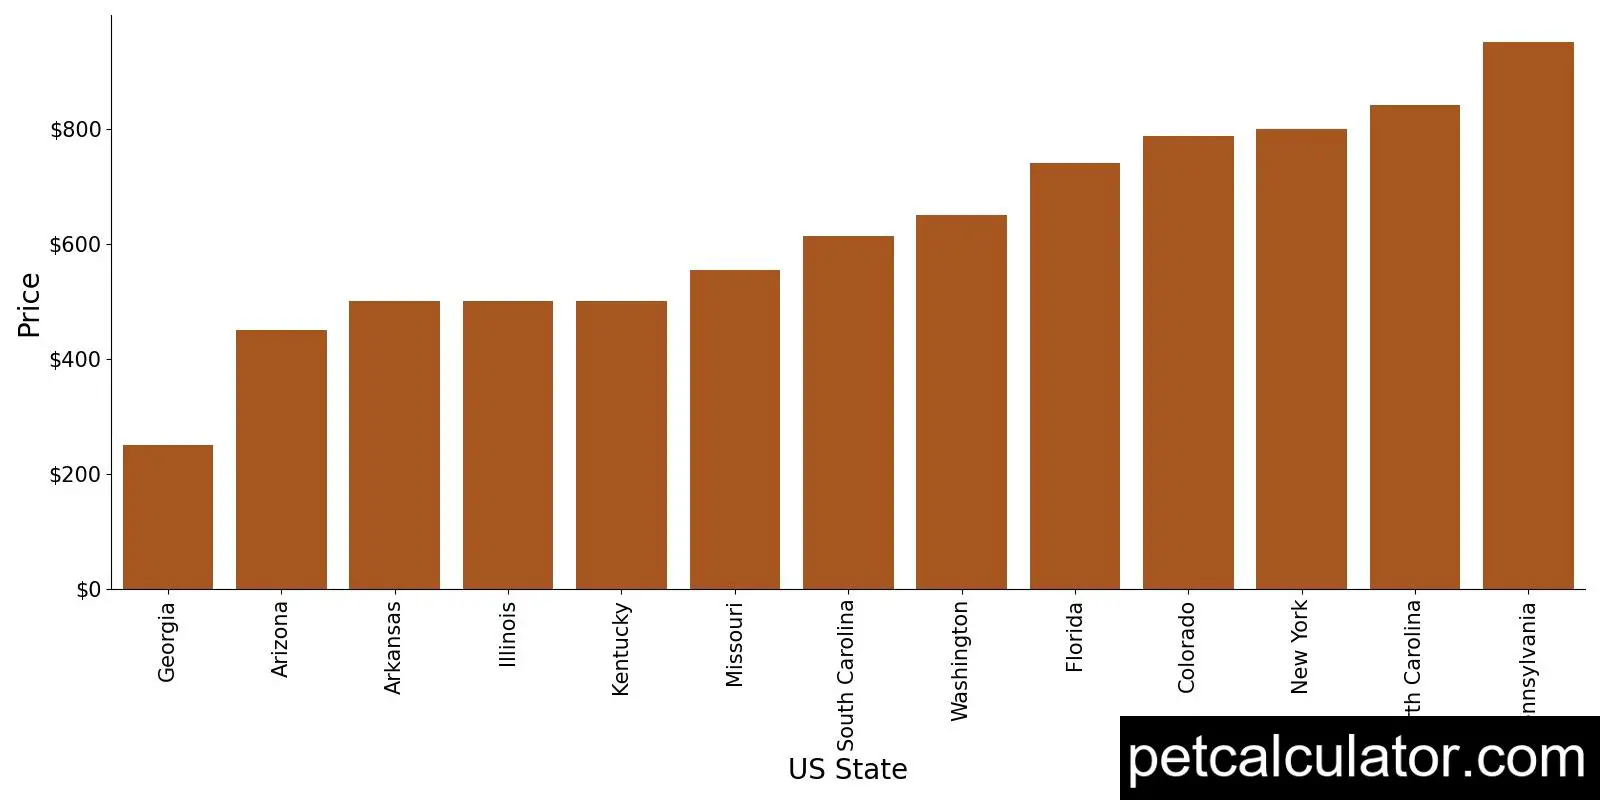 Price of Catahoula Bulldog by US State 